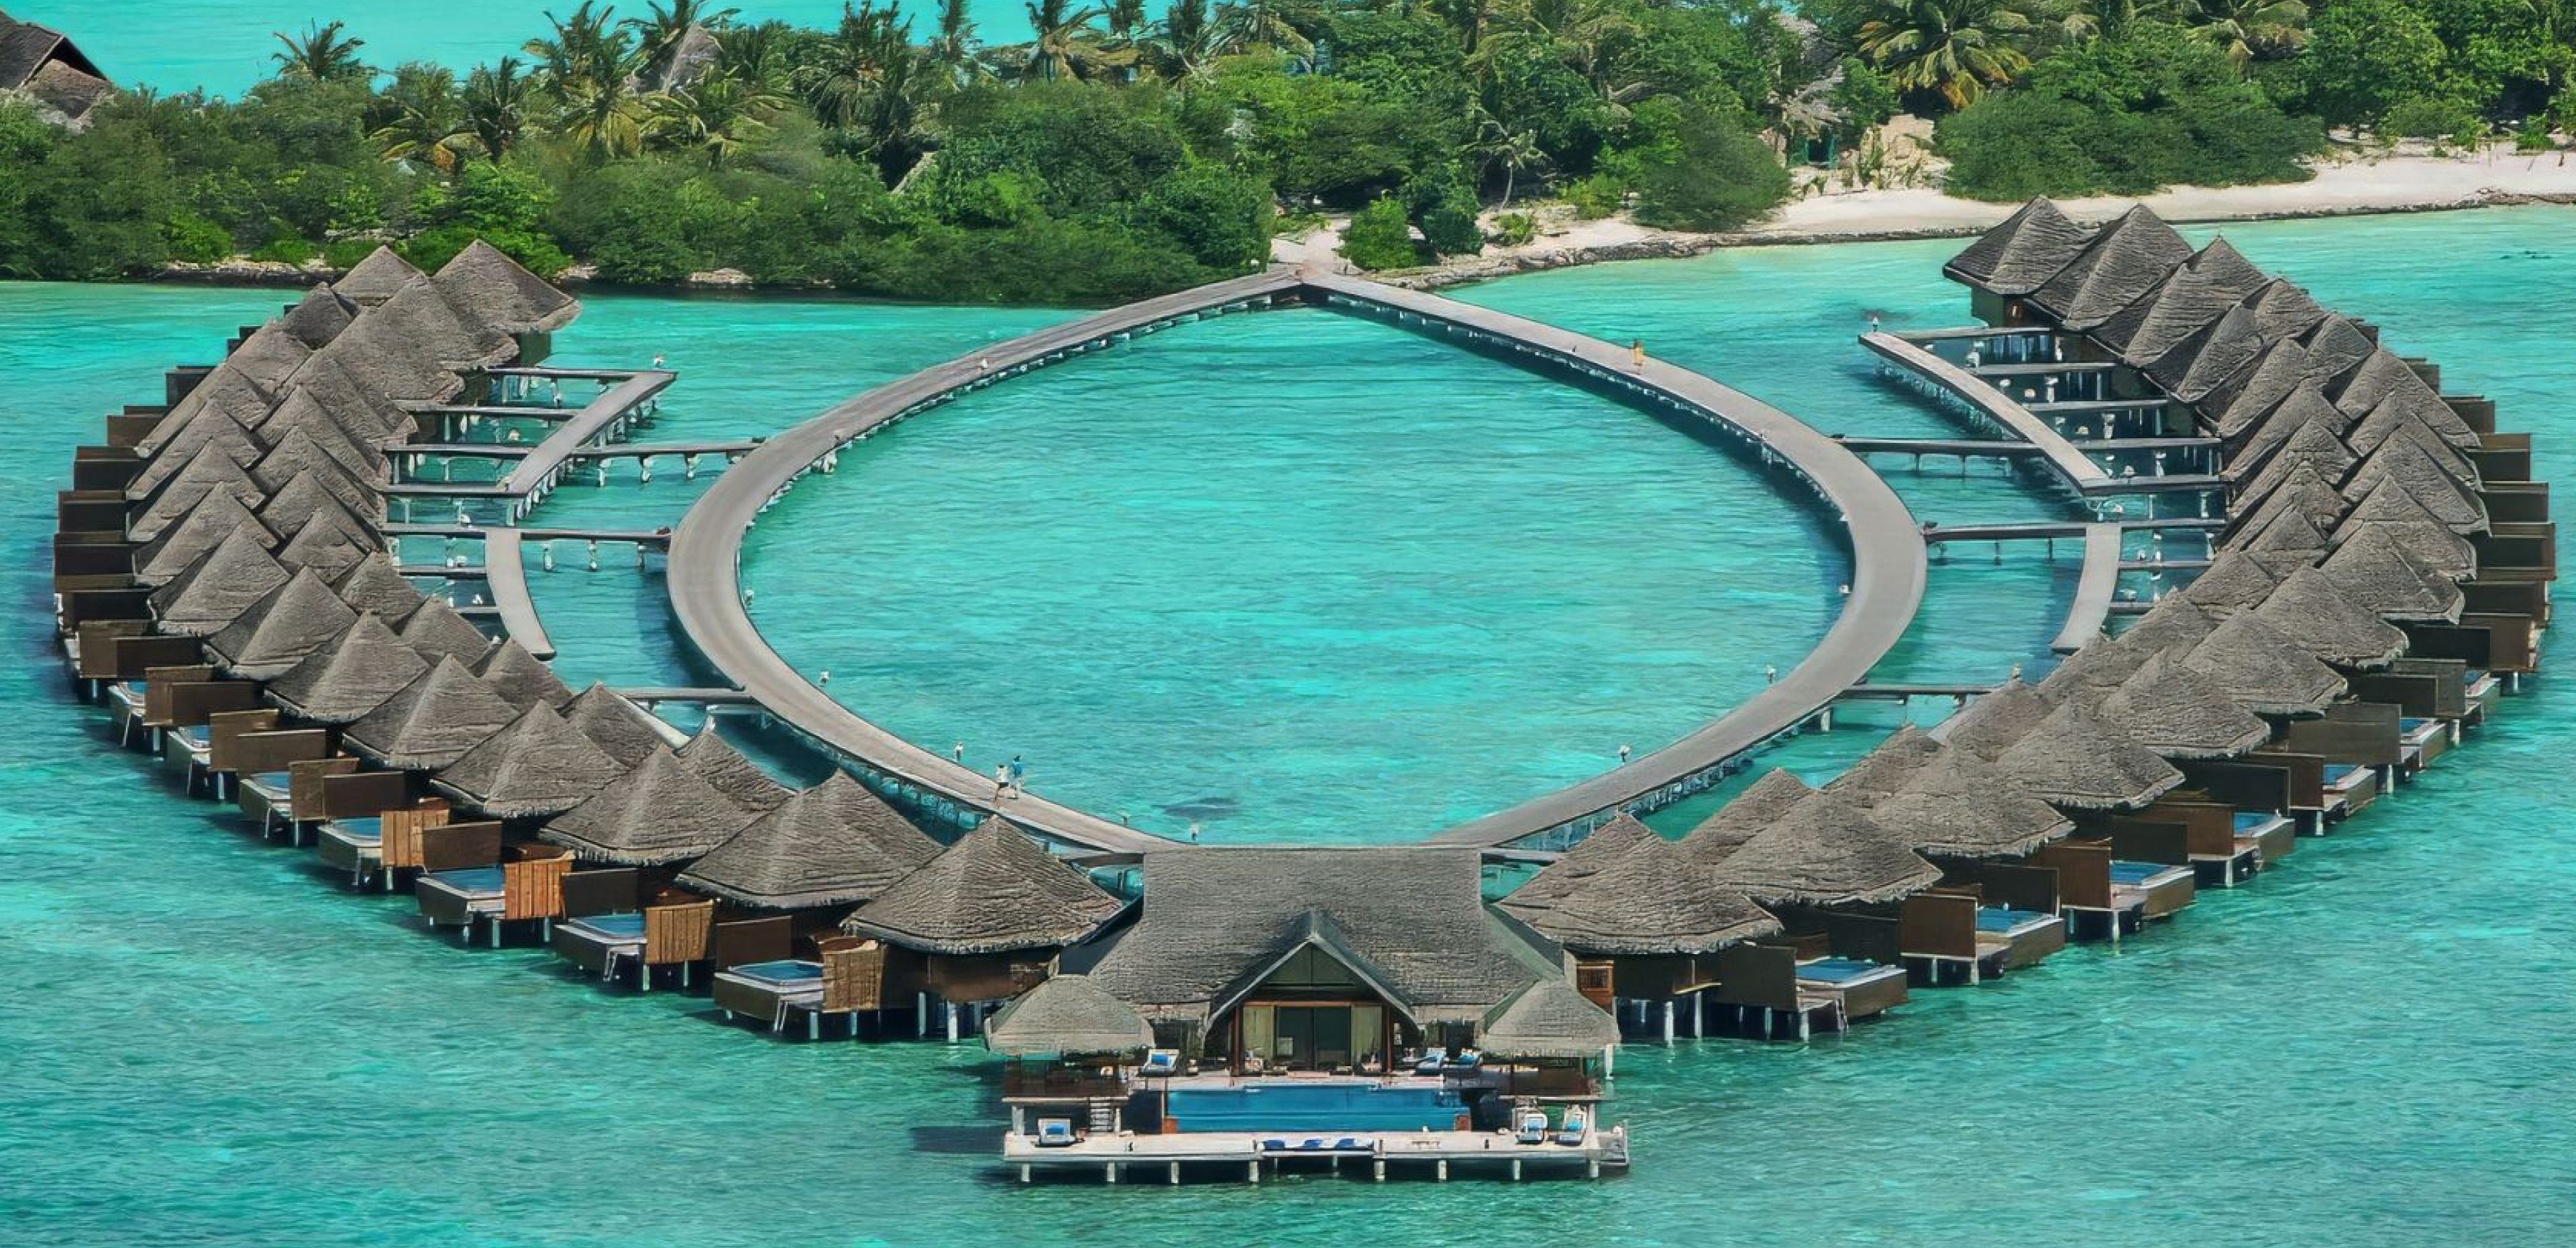 5 Star Hotels in Maldives - Luxury Hotels in Maldives | Taj Hotels